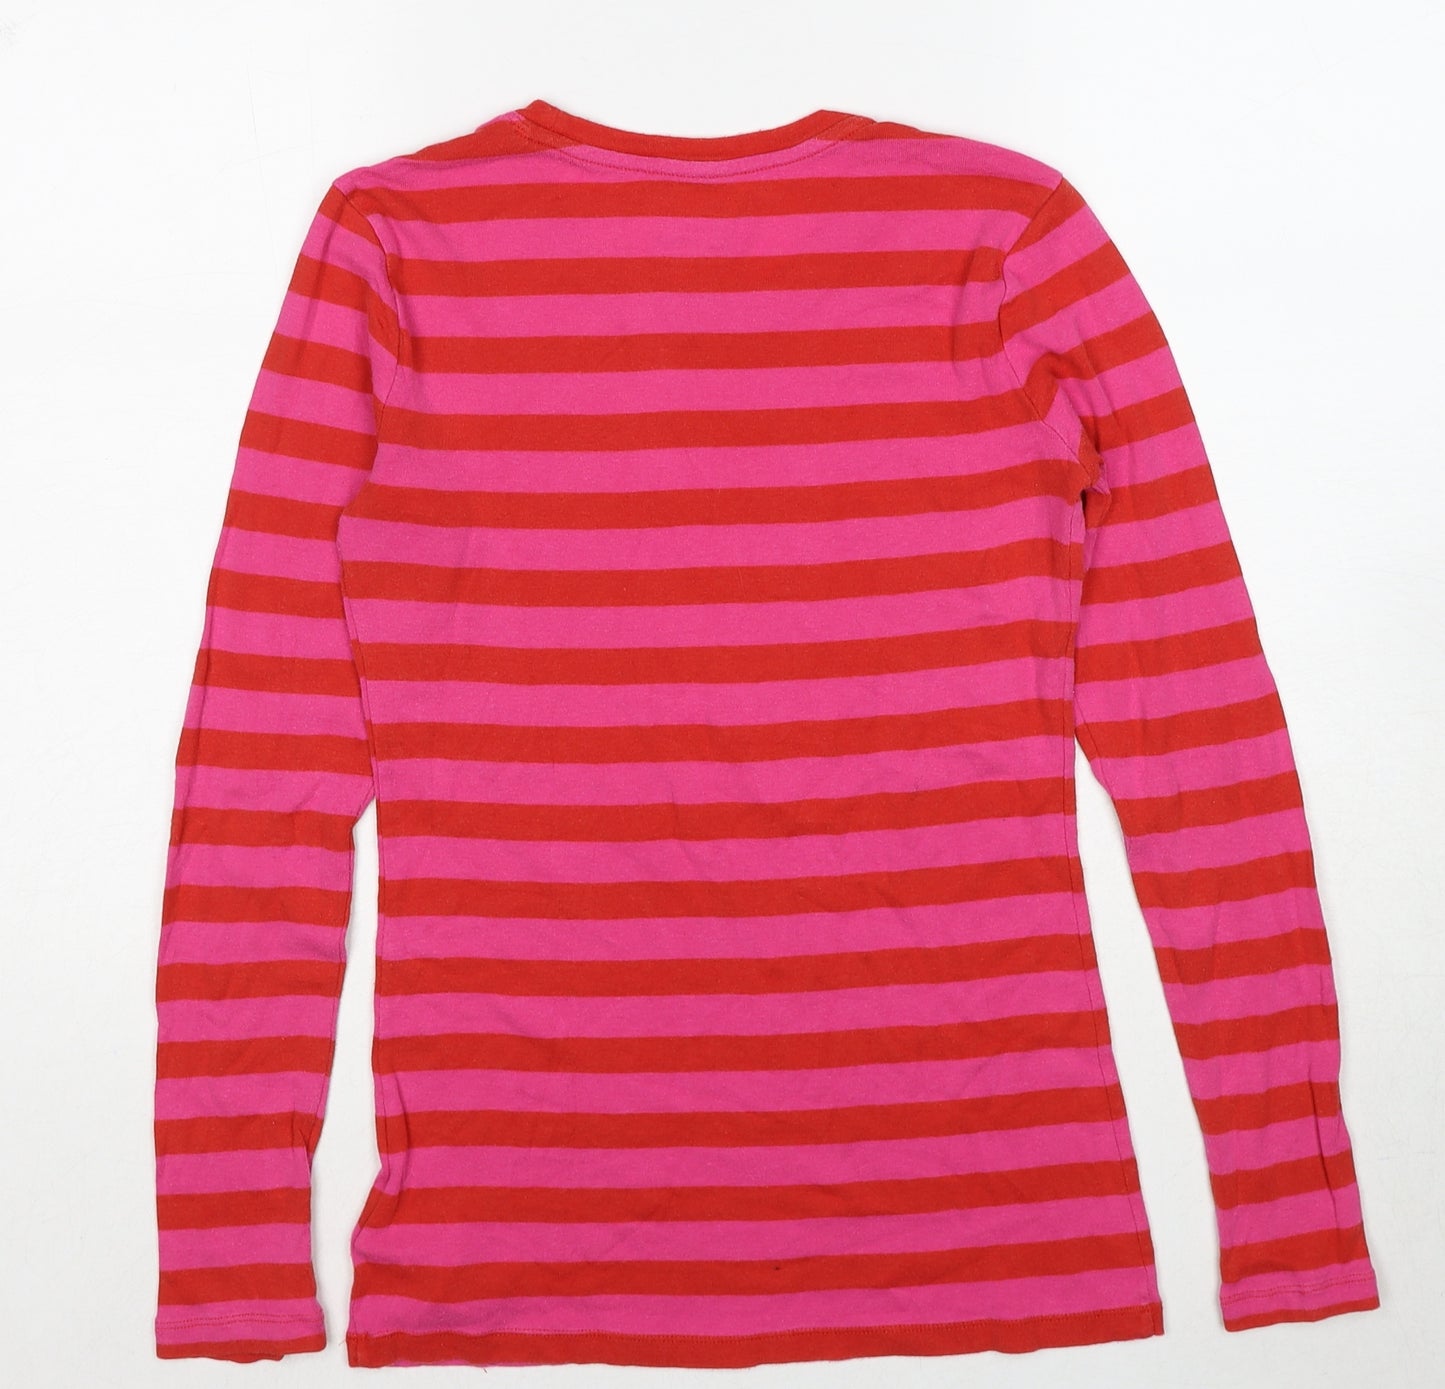 Gap Womens Pink Striped Cotton Basic T-Shirt Size S Round Neck